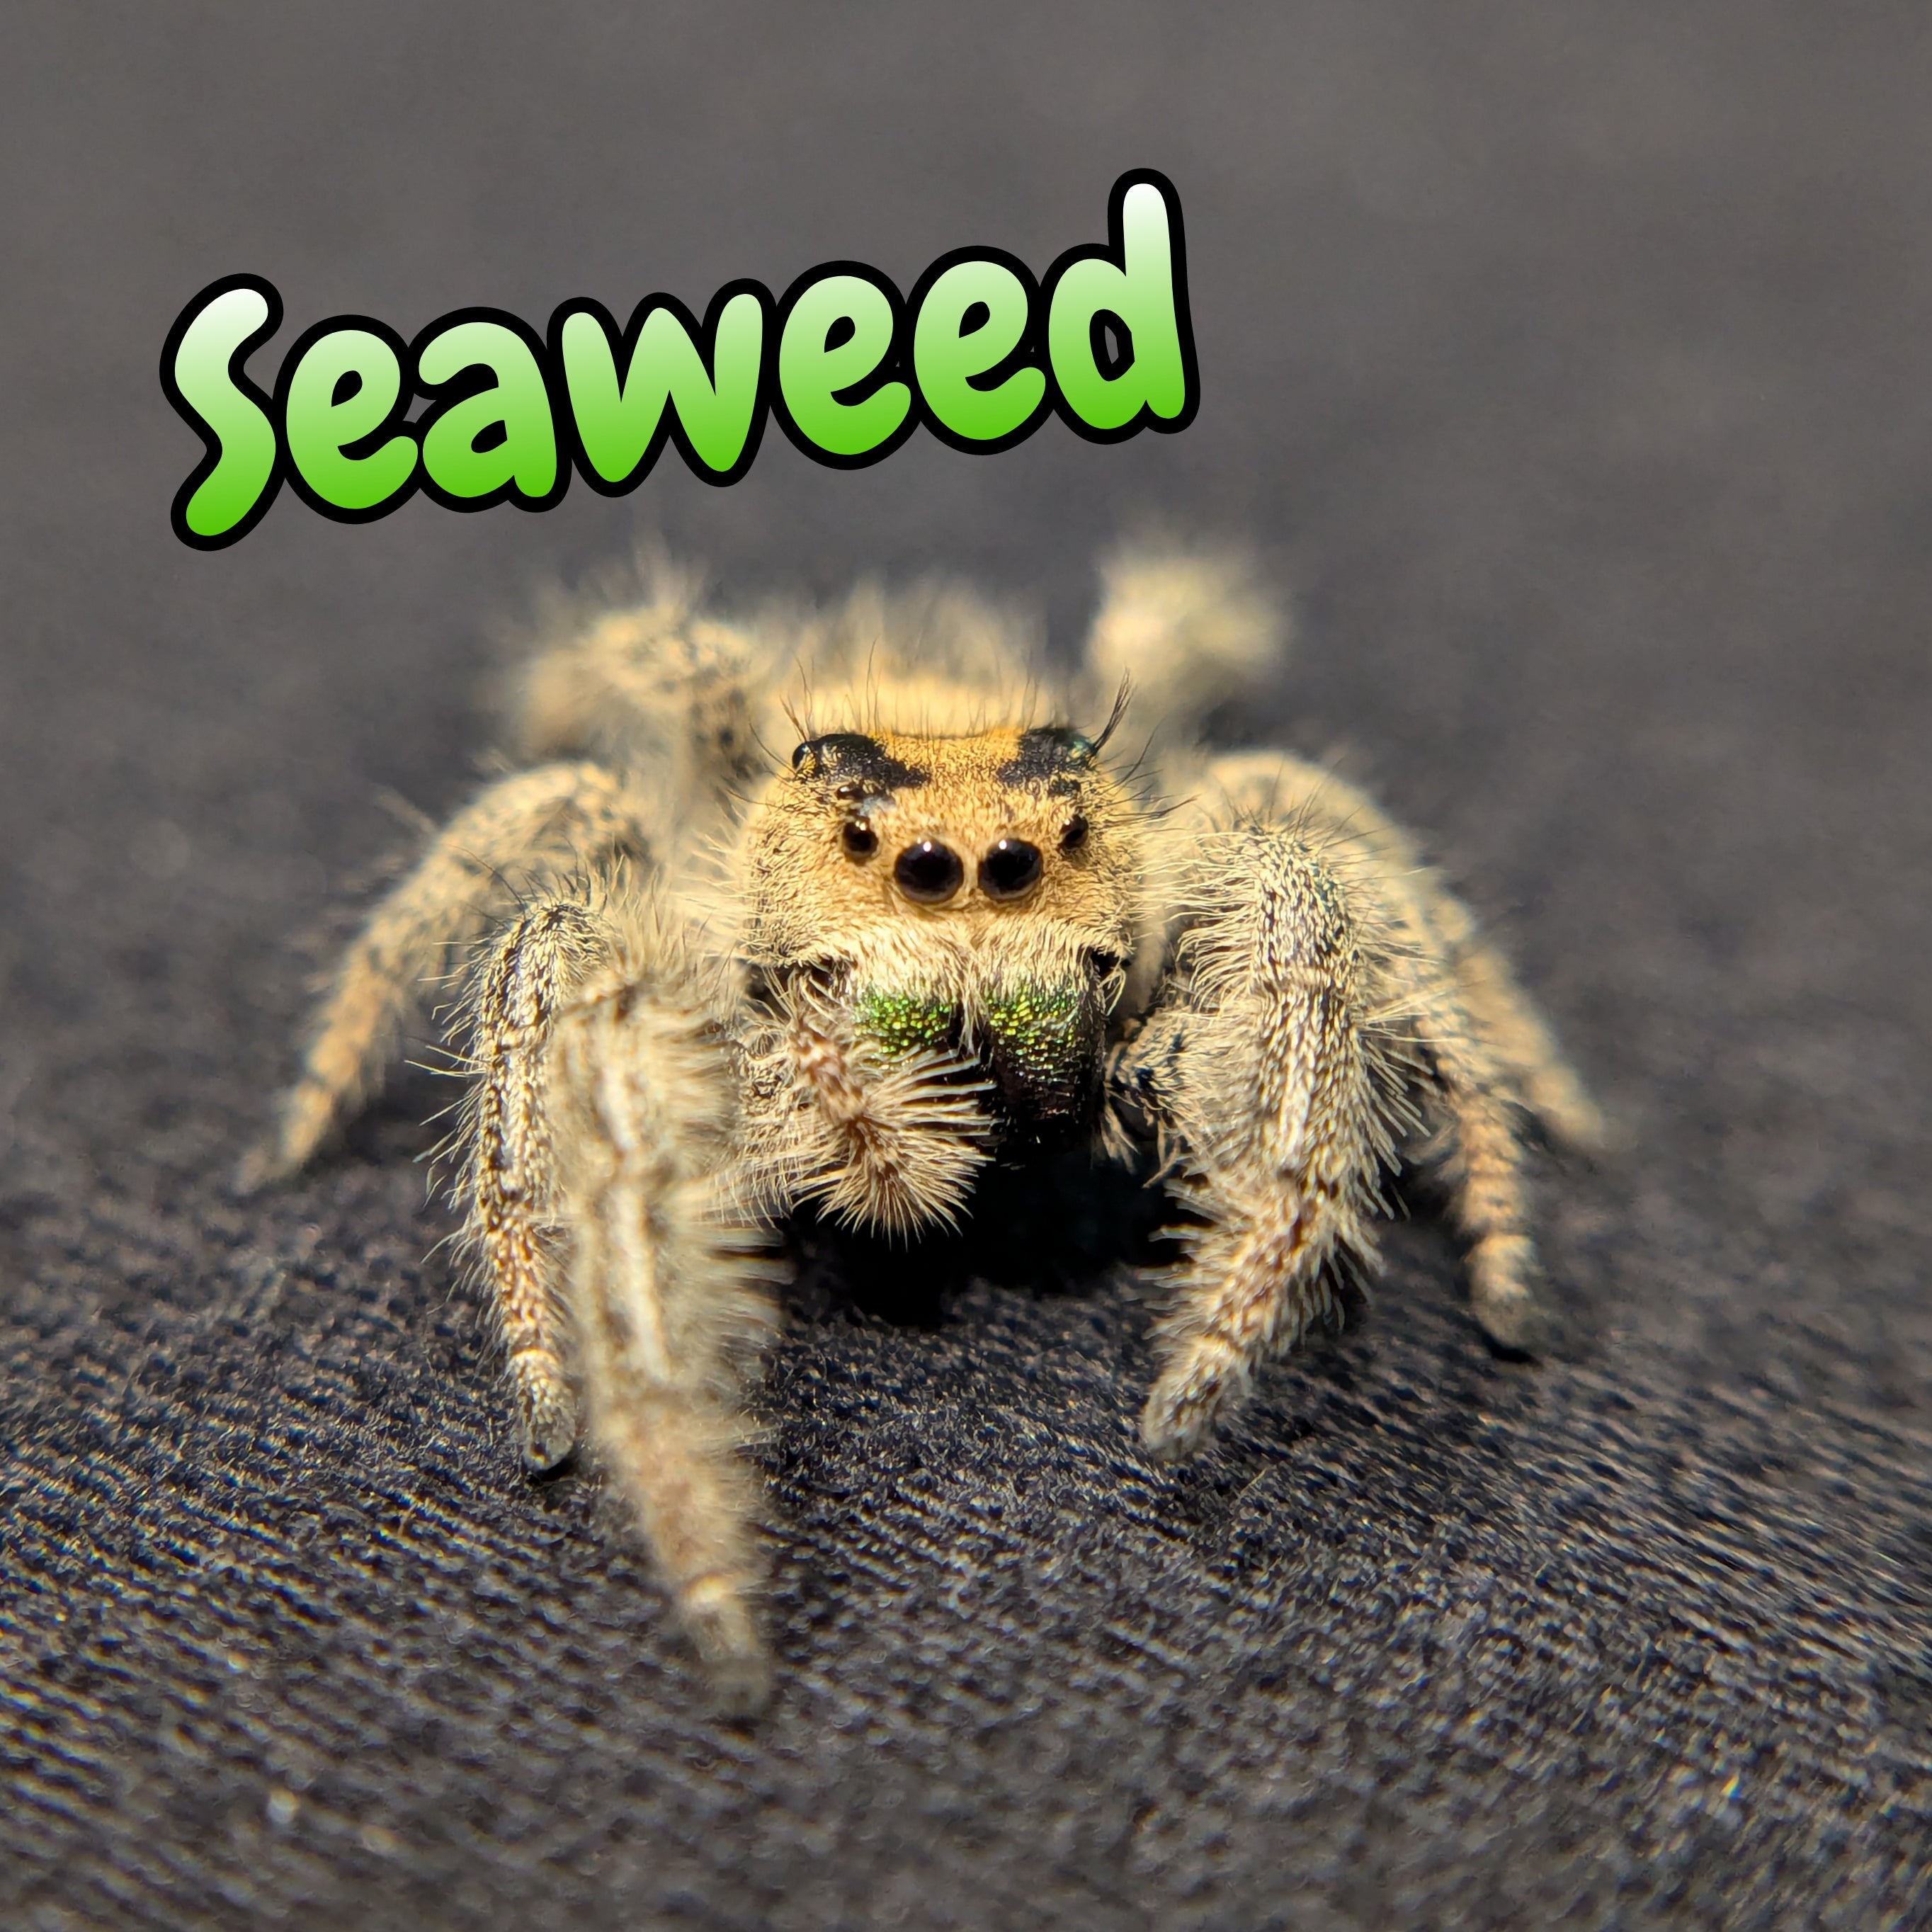 Regal Jumping Spider "Seaweed"